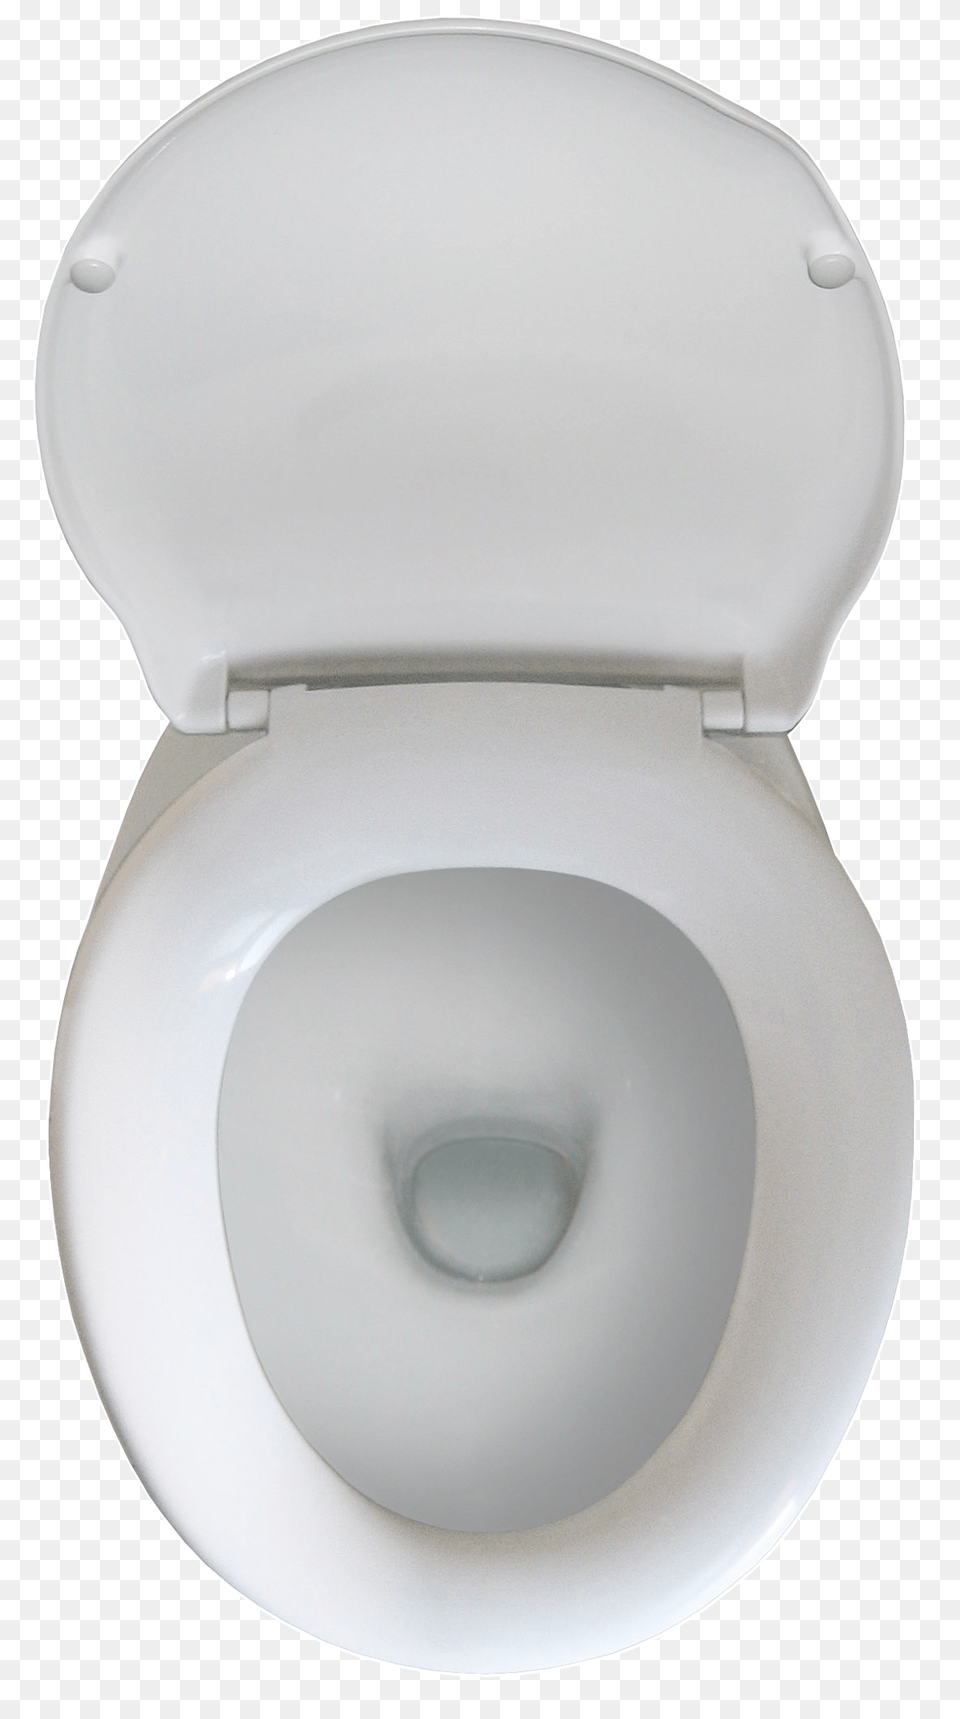 Toilet Seat By Absurdwordpreferred, Indoors, Bathroom, Room, Potty Png Image